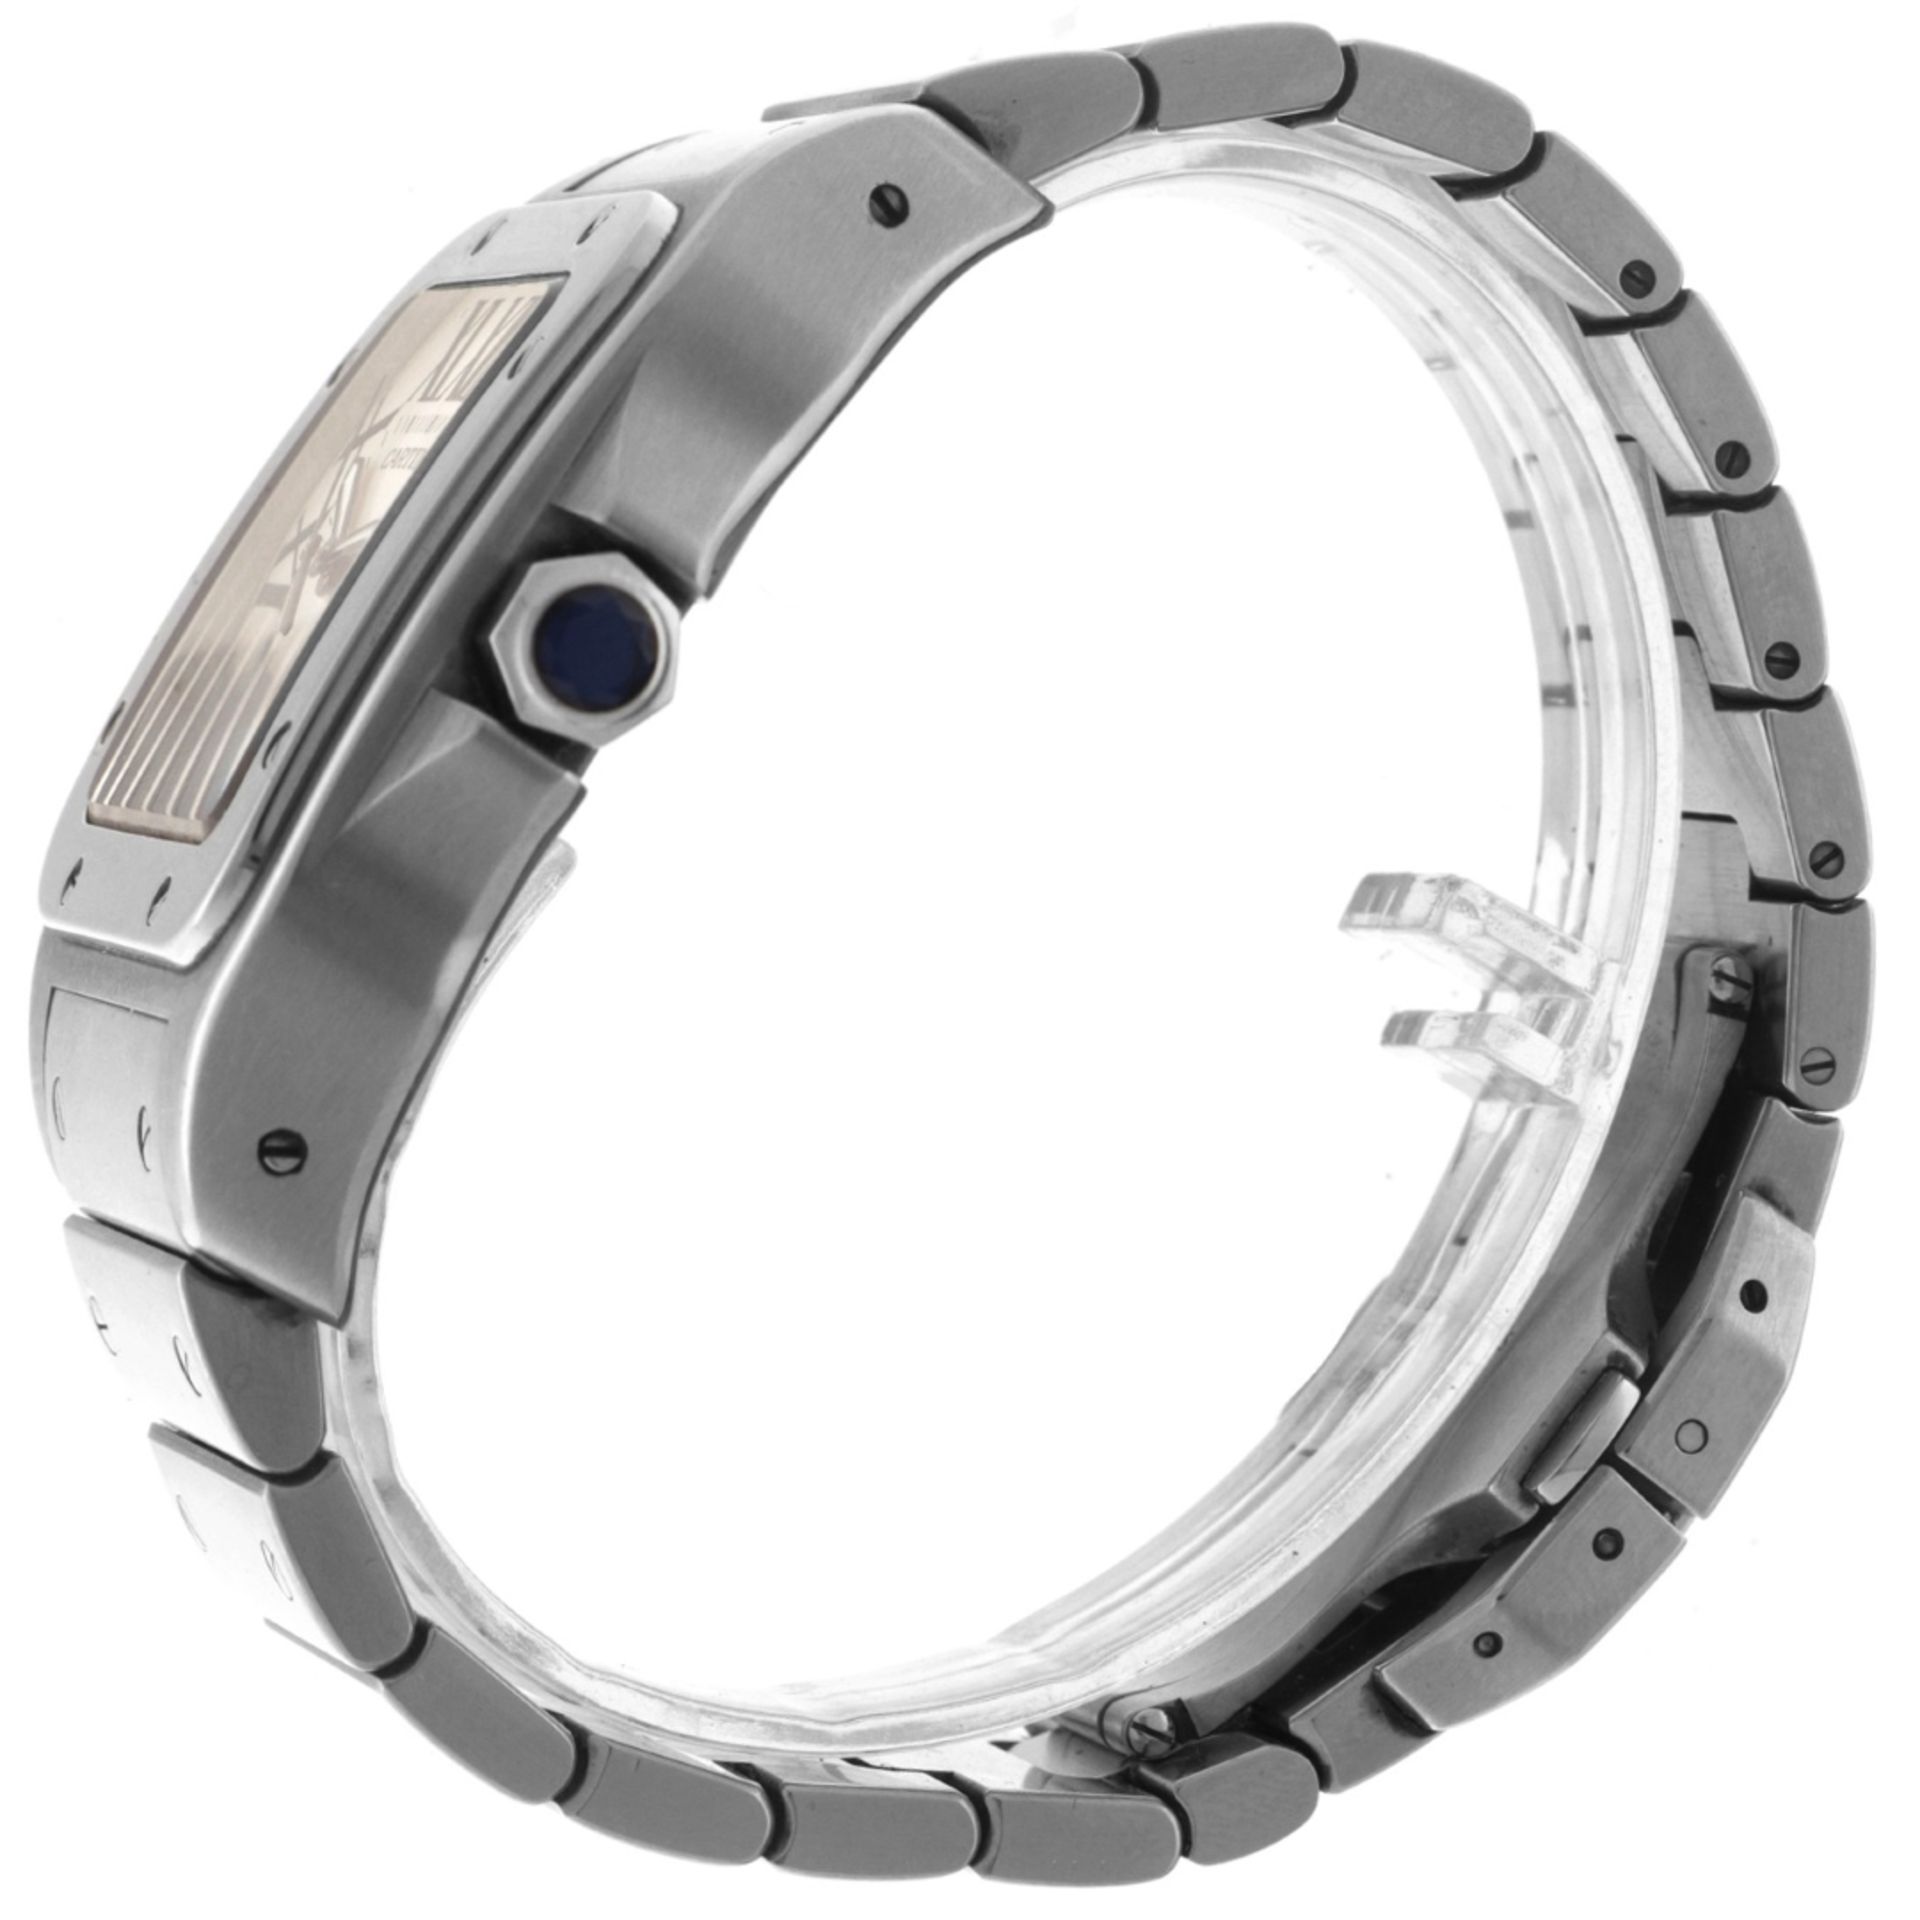 No Reserve - Cartier Santos 100 XL 2656 - Men's watch.  - Image 5 of 6